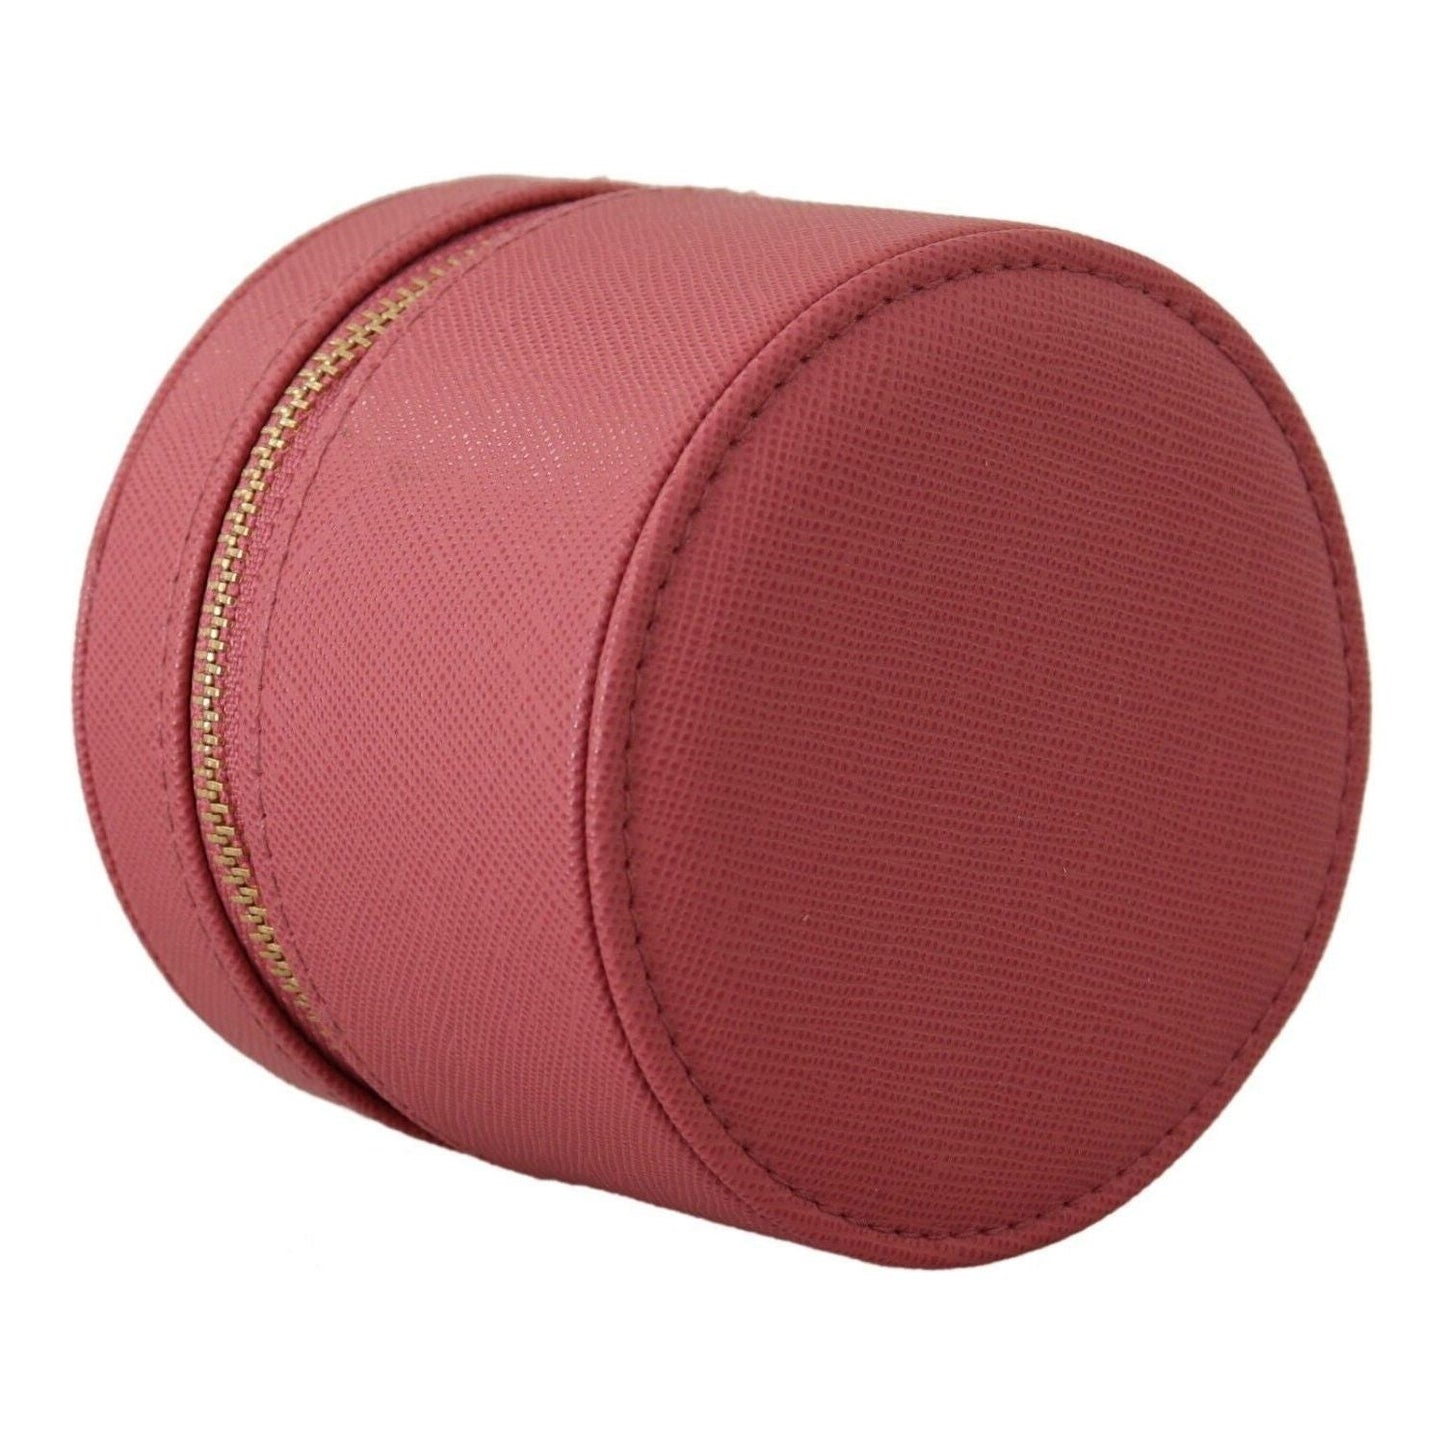 Michael Kors Elegant Pink Leather Round Wallet pink-leather-zip-round-pouch-purse-storage-wallet